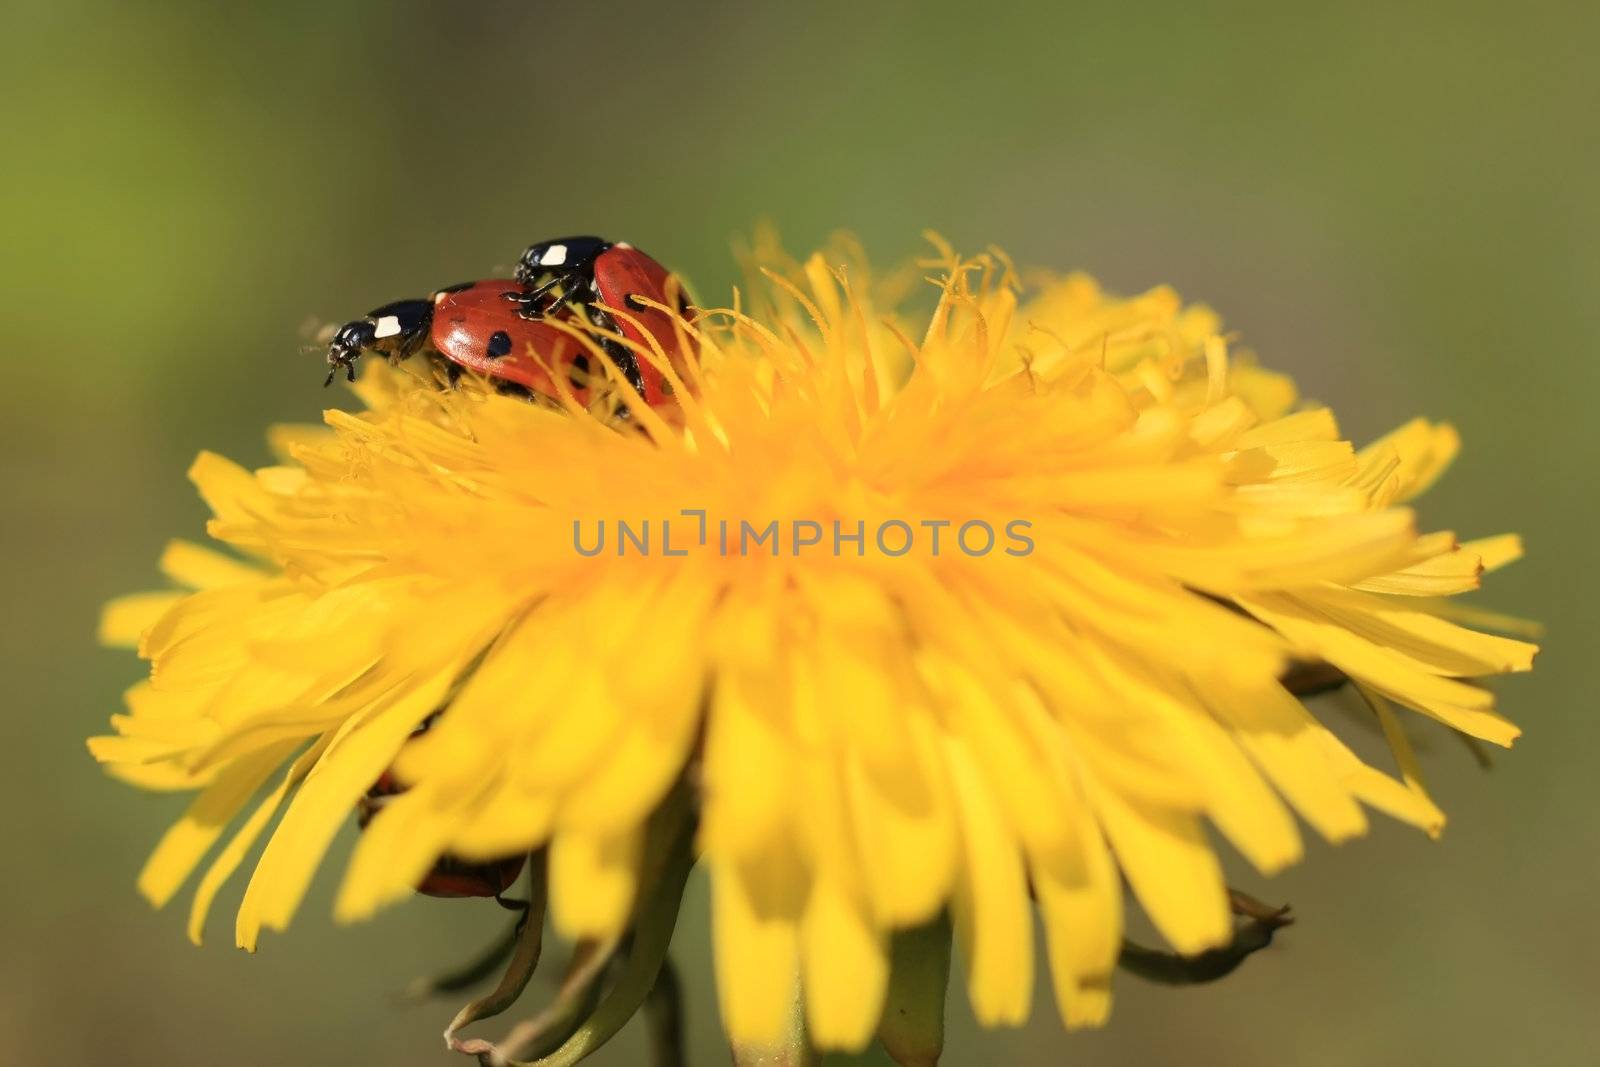 Colorful ladybug crawling on a yellow dandelion